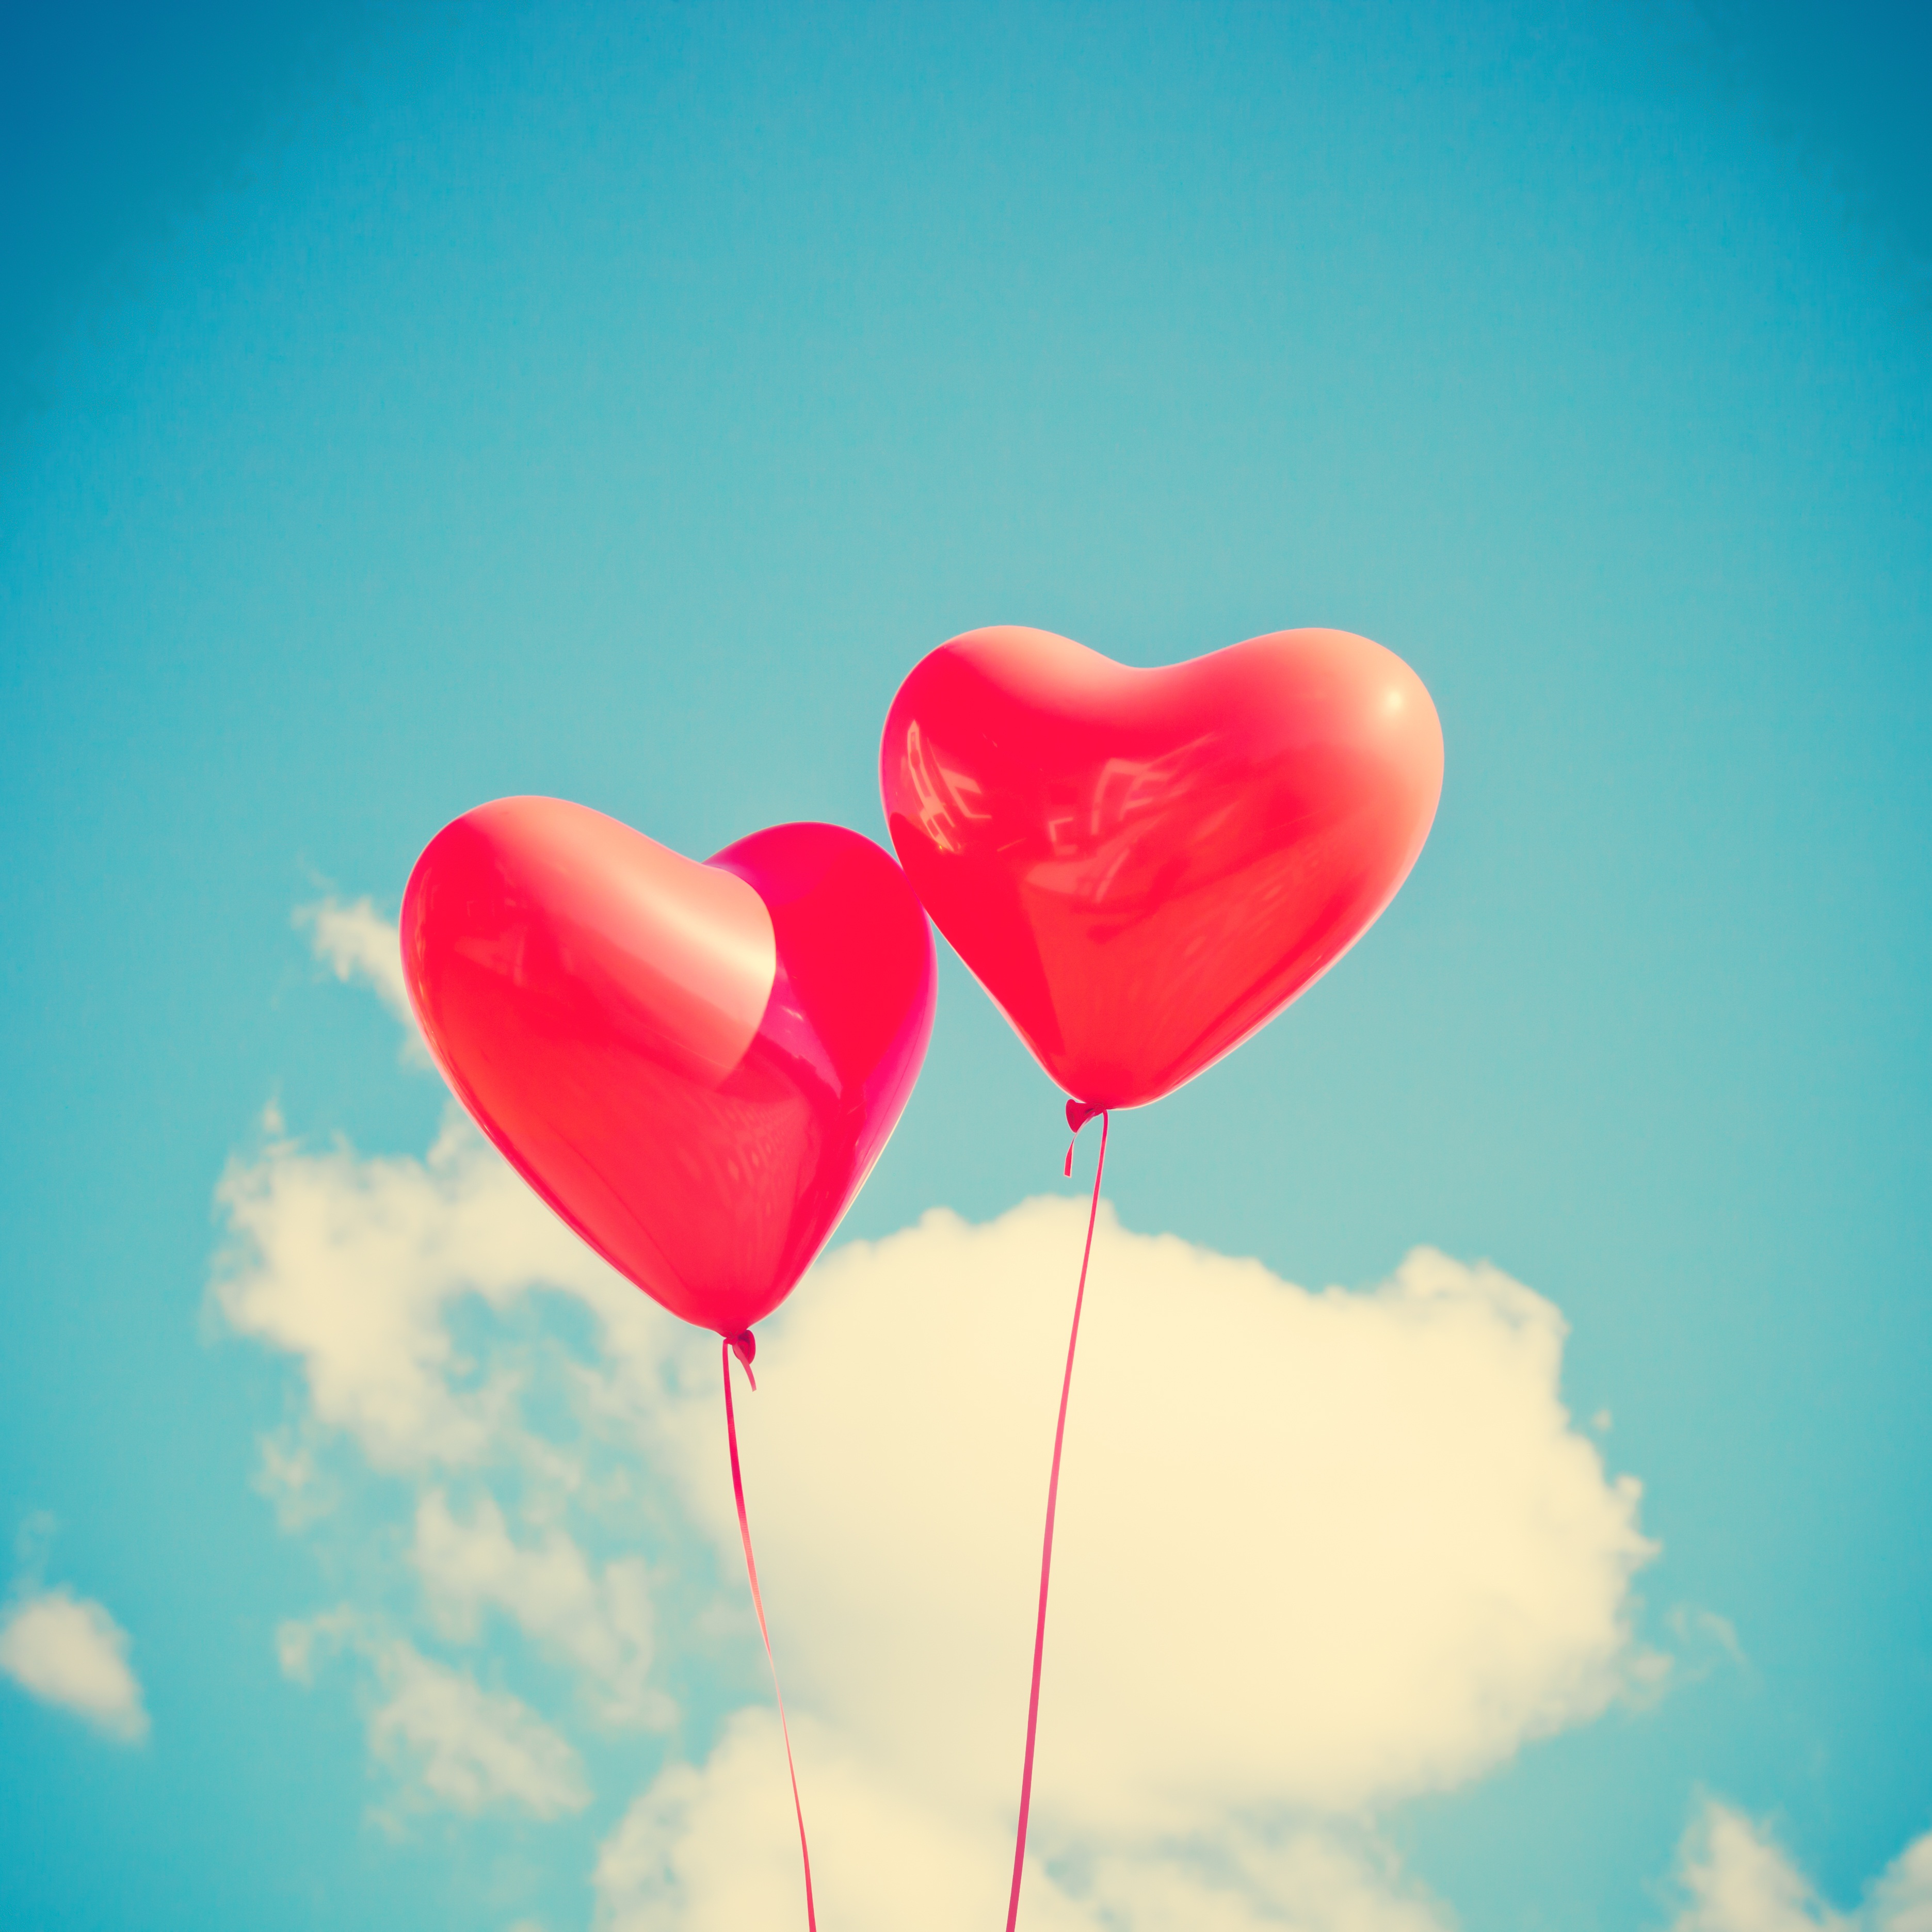 heart, love, balloons, sky, ease cellphone